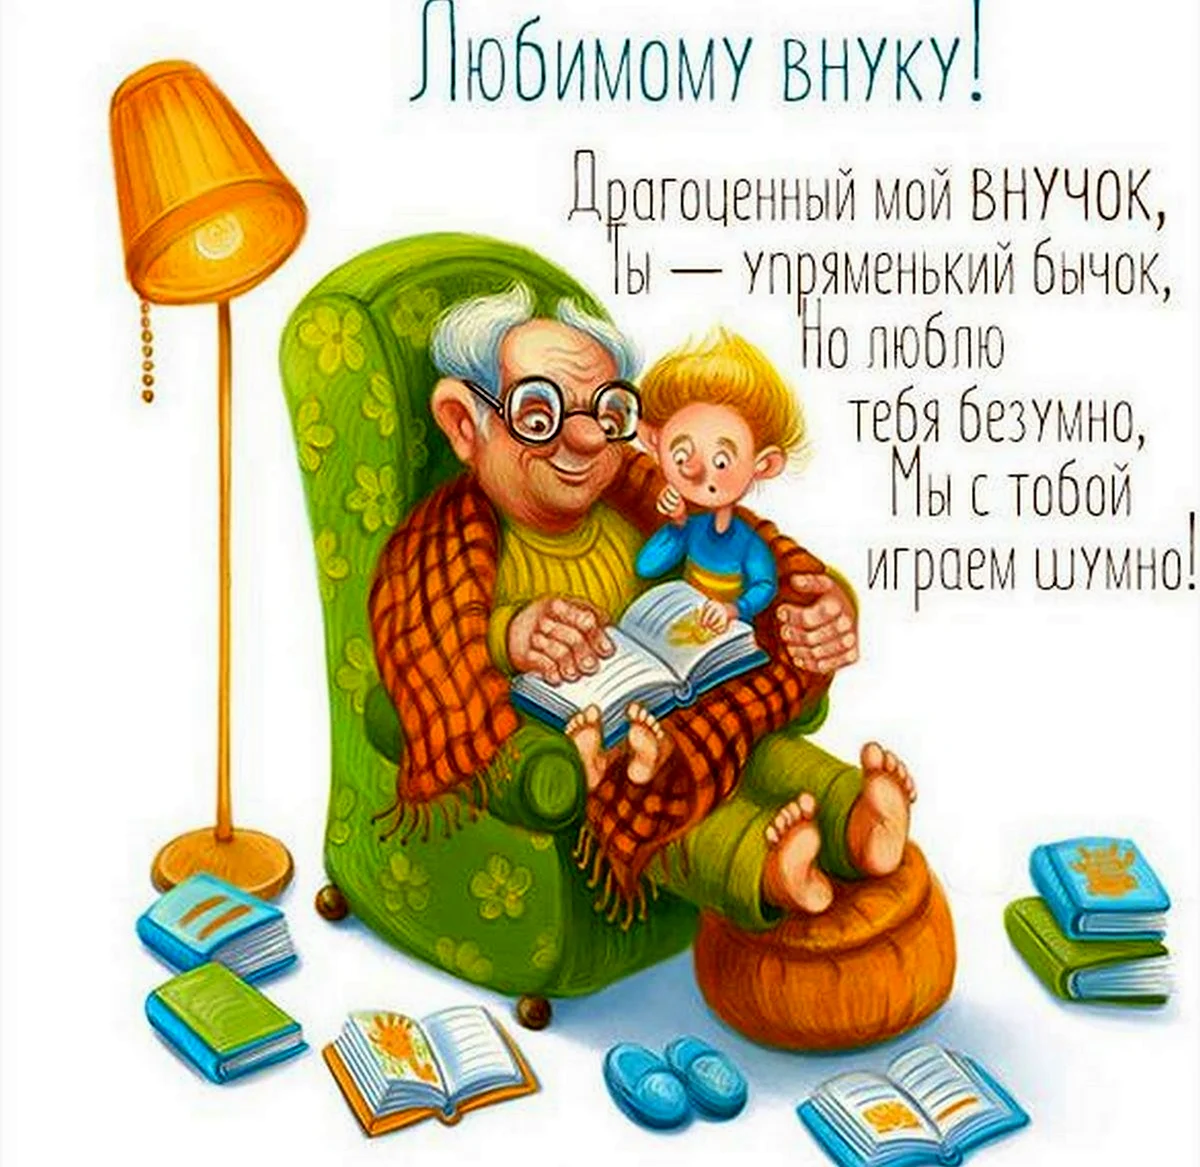 Дедушка с внучками иллюстрации. Картинка